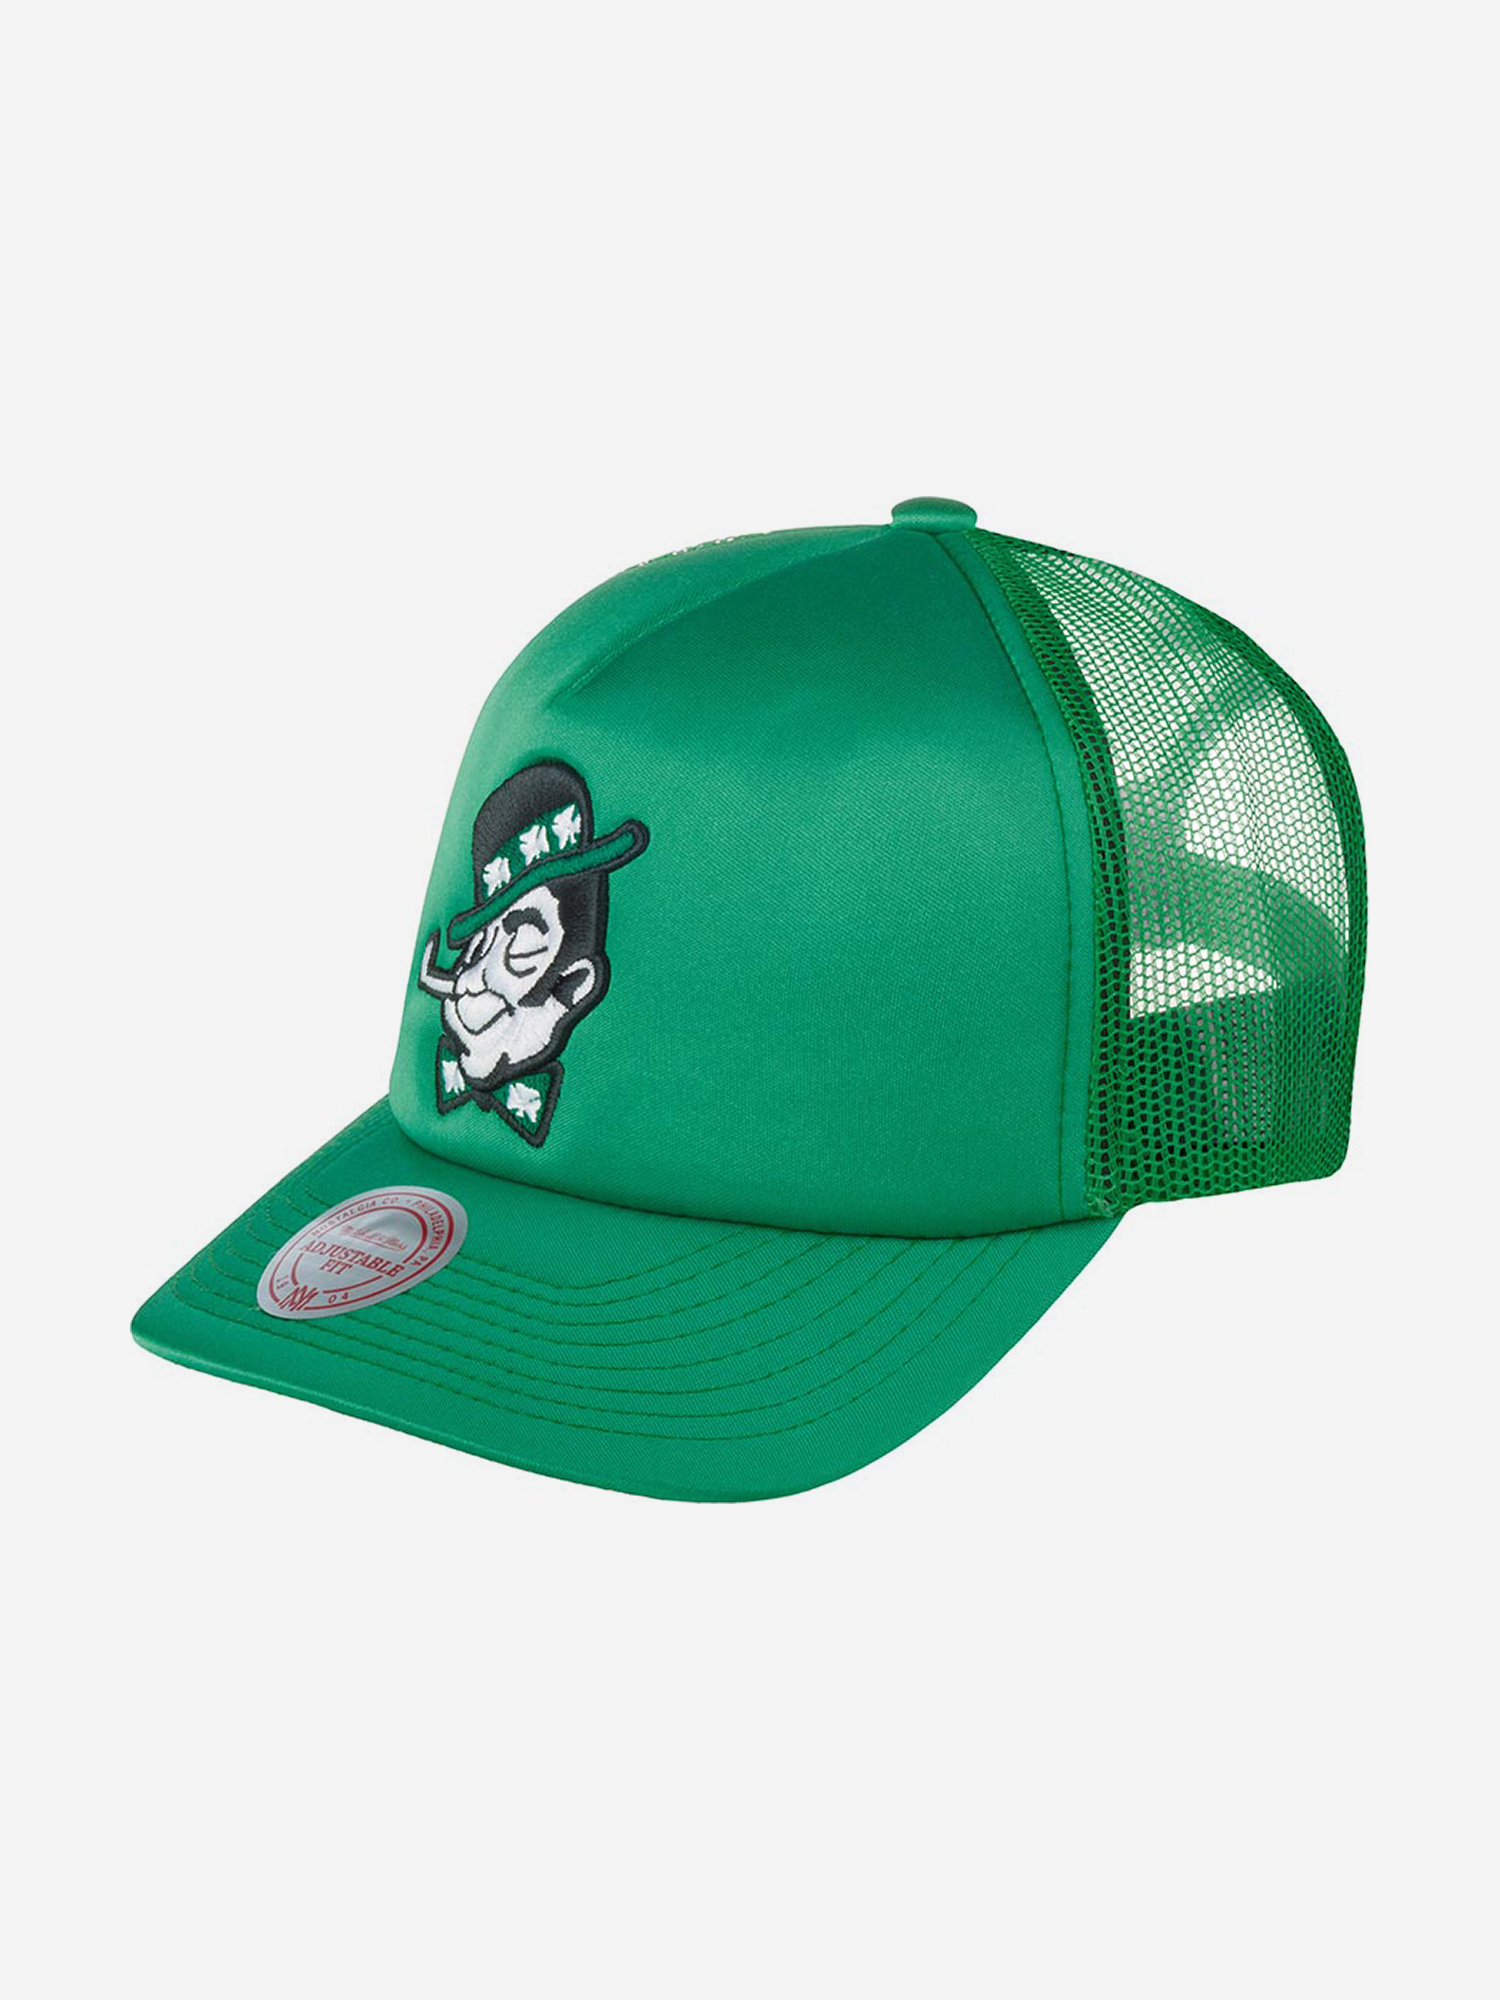 Бейсболка с сеточкой MITCHELL NESS HHSS3467-BCEYYPPPGREN Boston Celtics NBA (зеленый), Зеленый бейсболка с сеточкой goorin brothers 101 0480 зеленый зеленый